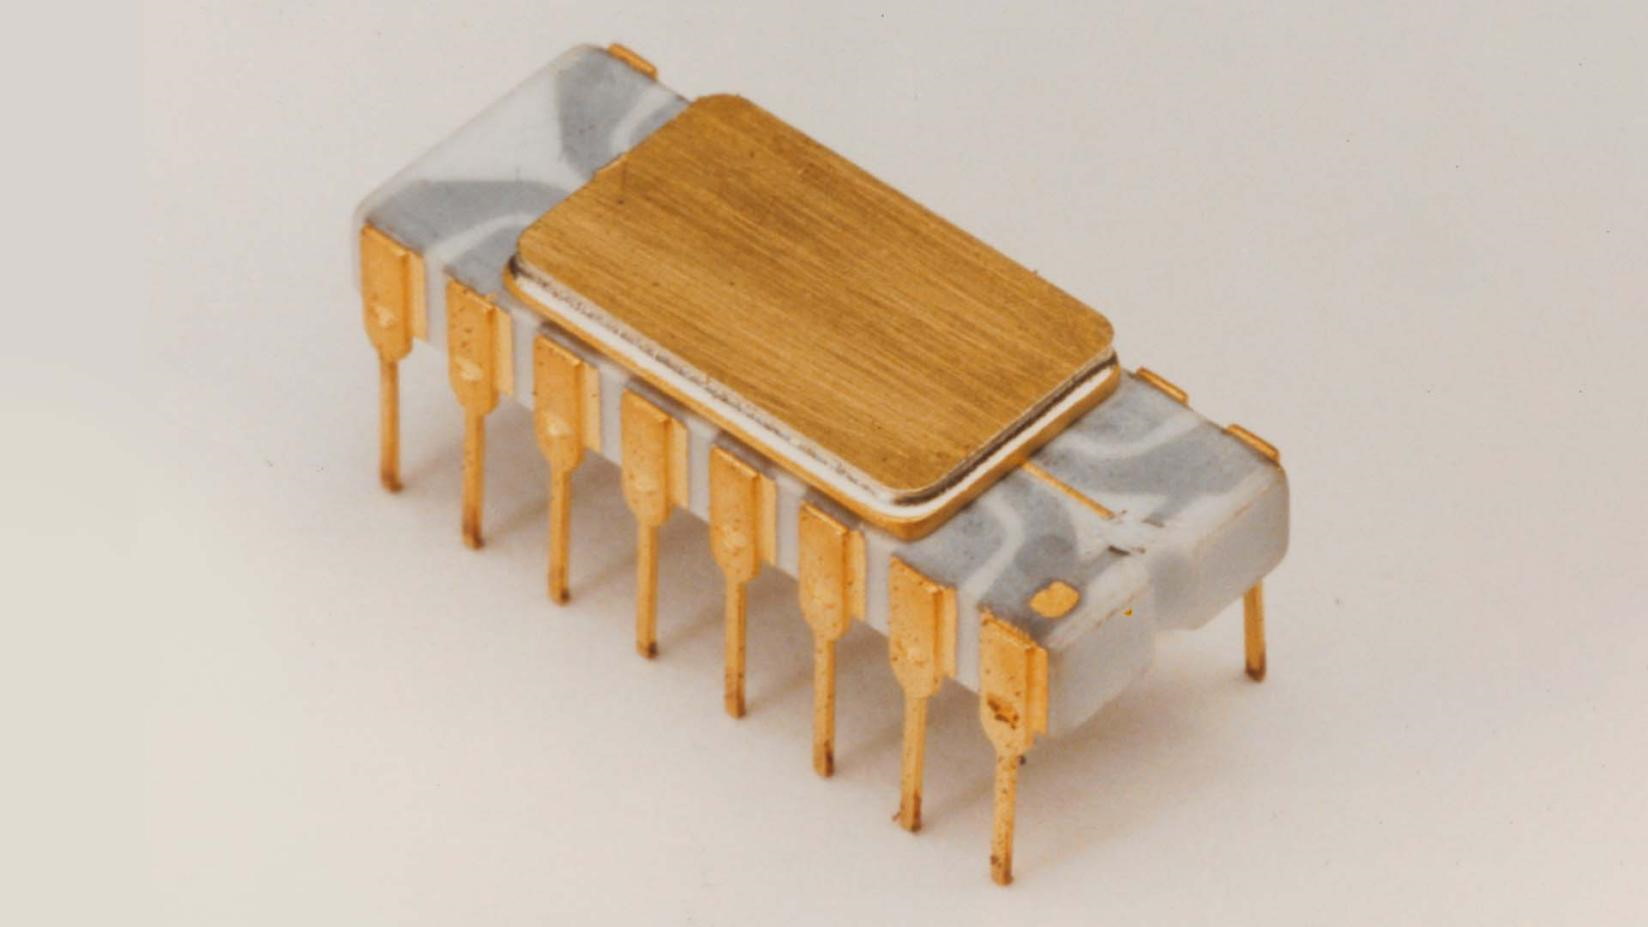 La puce Intel 4004, le premier microprocesseur grand public. © Intel